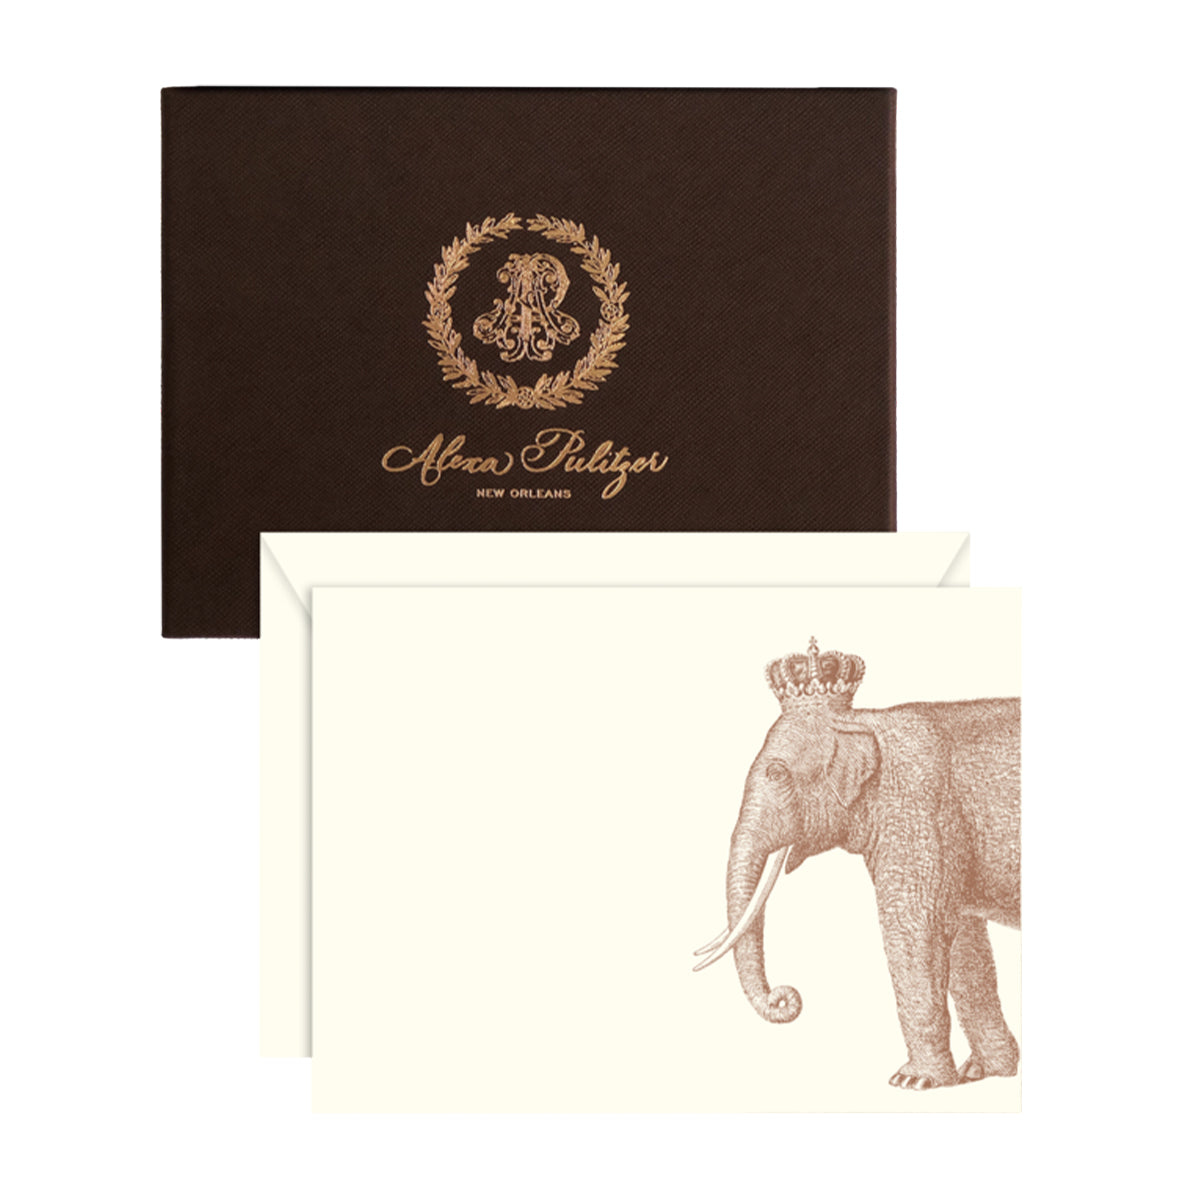 Royal Elephant Engraved Boxed Notes